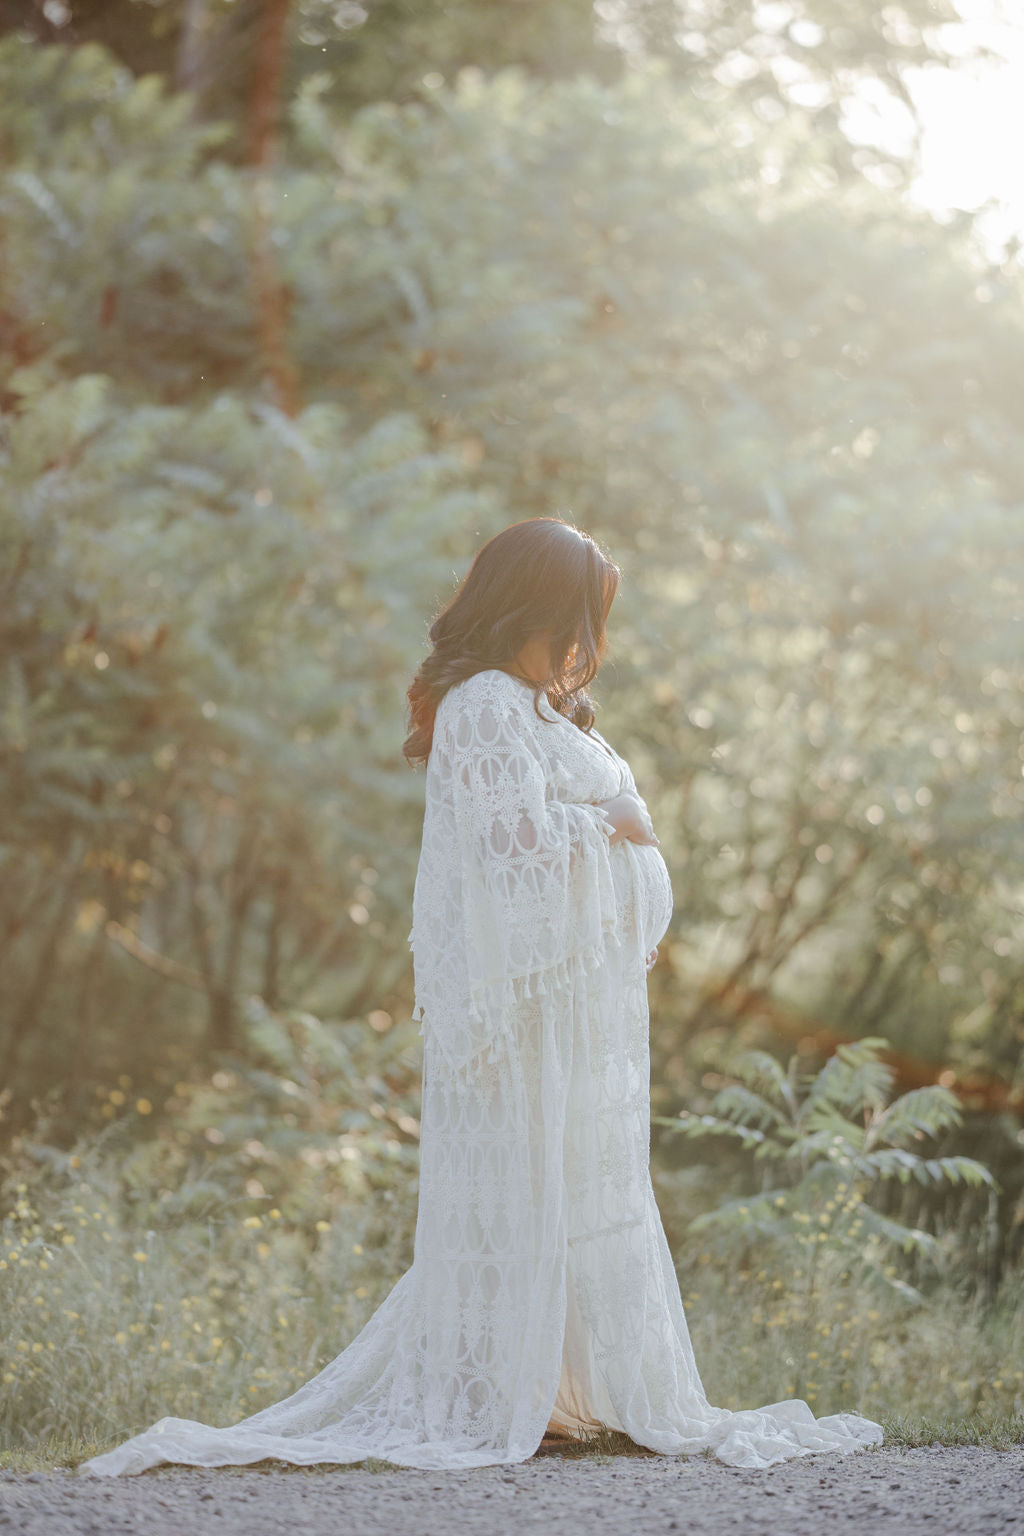 Scalloped Lace Boho Gown - maternity photoshoot dress